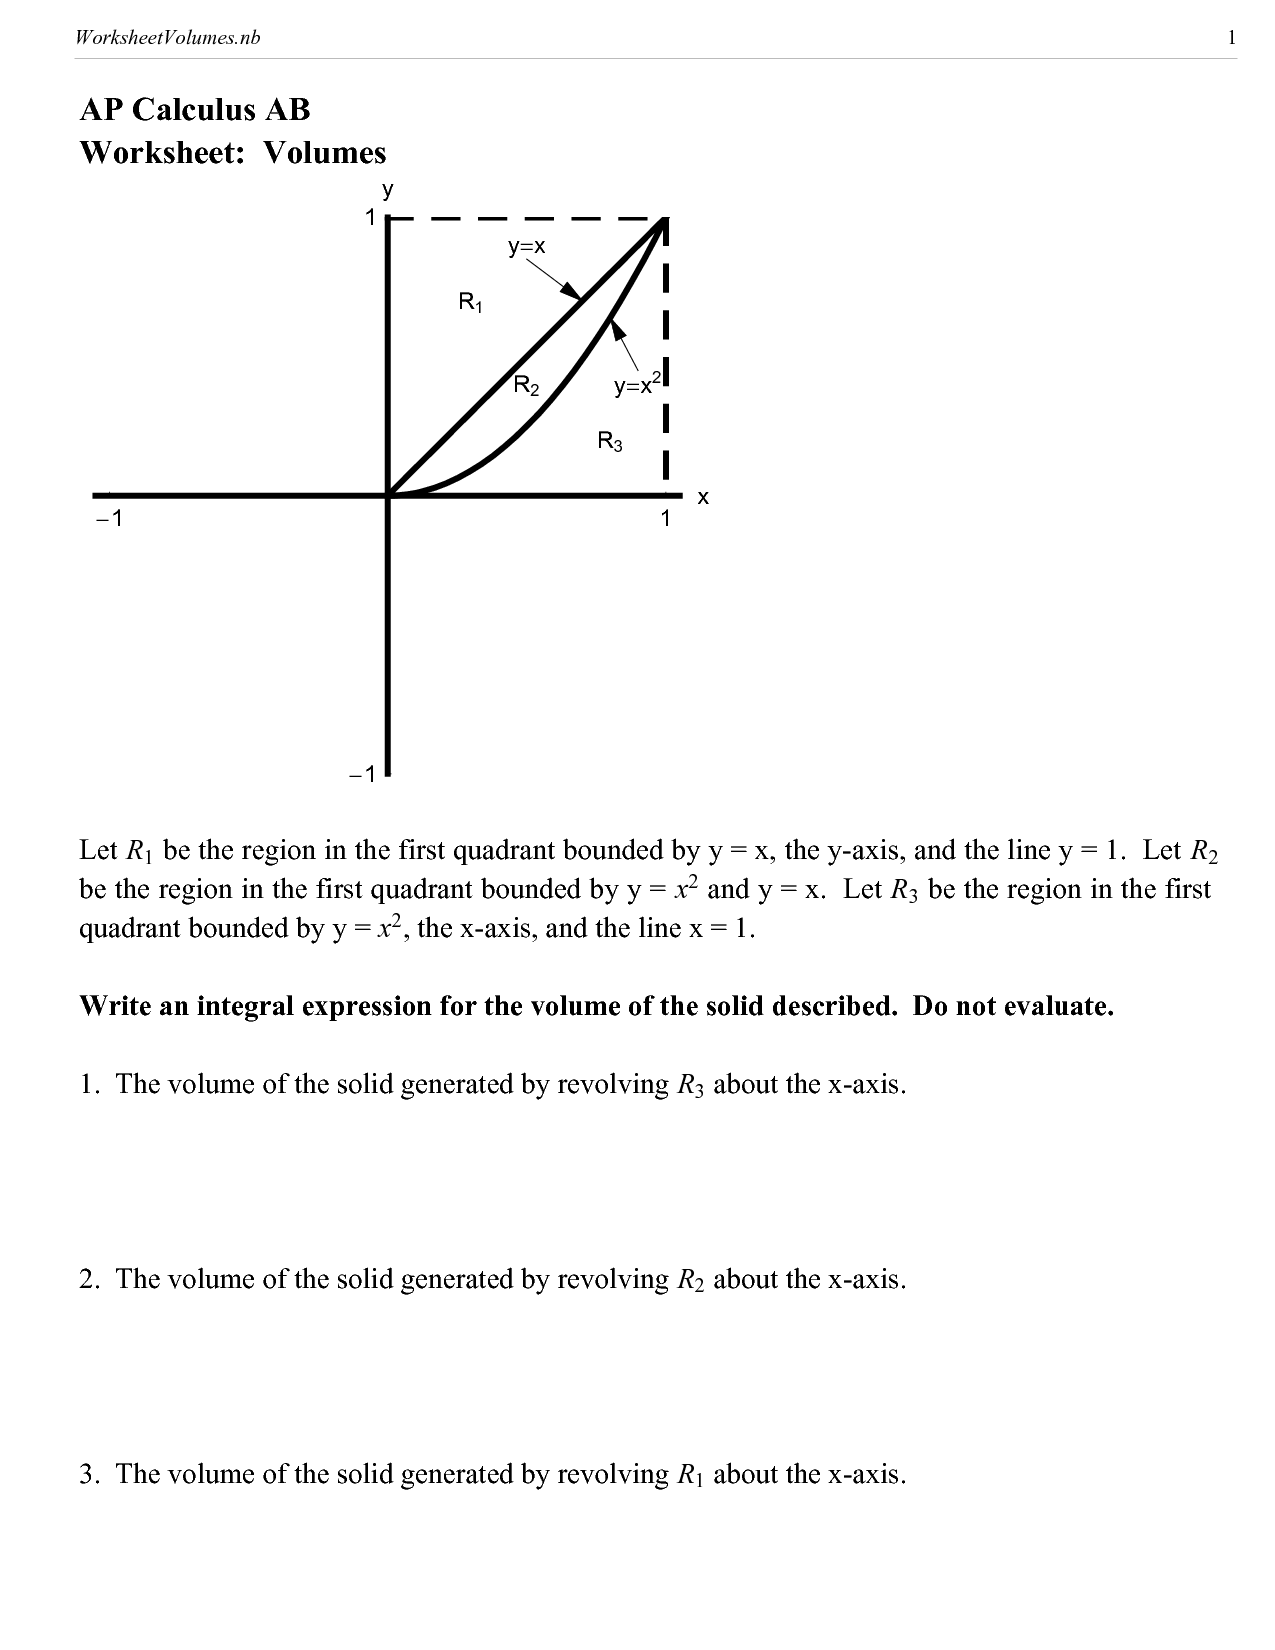 AP Calculus Worksheets Image